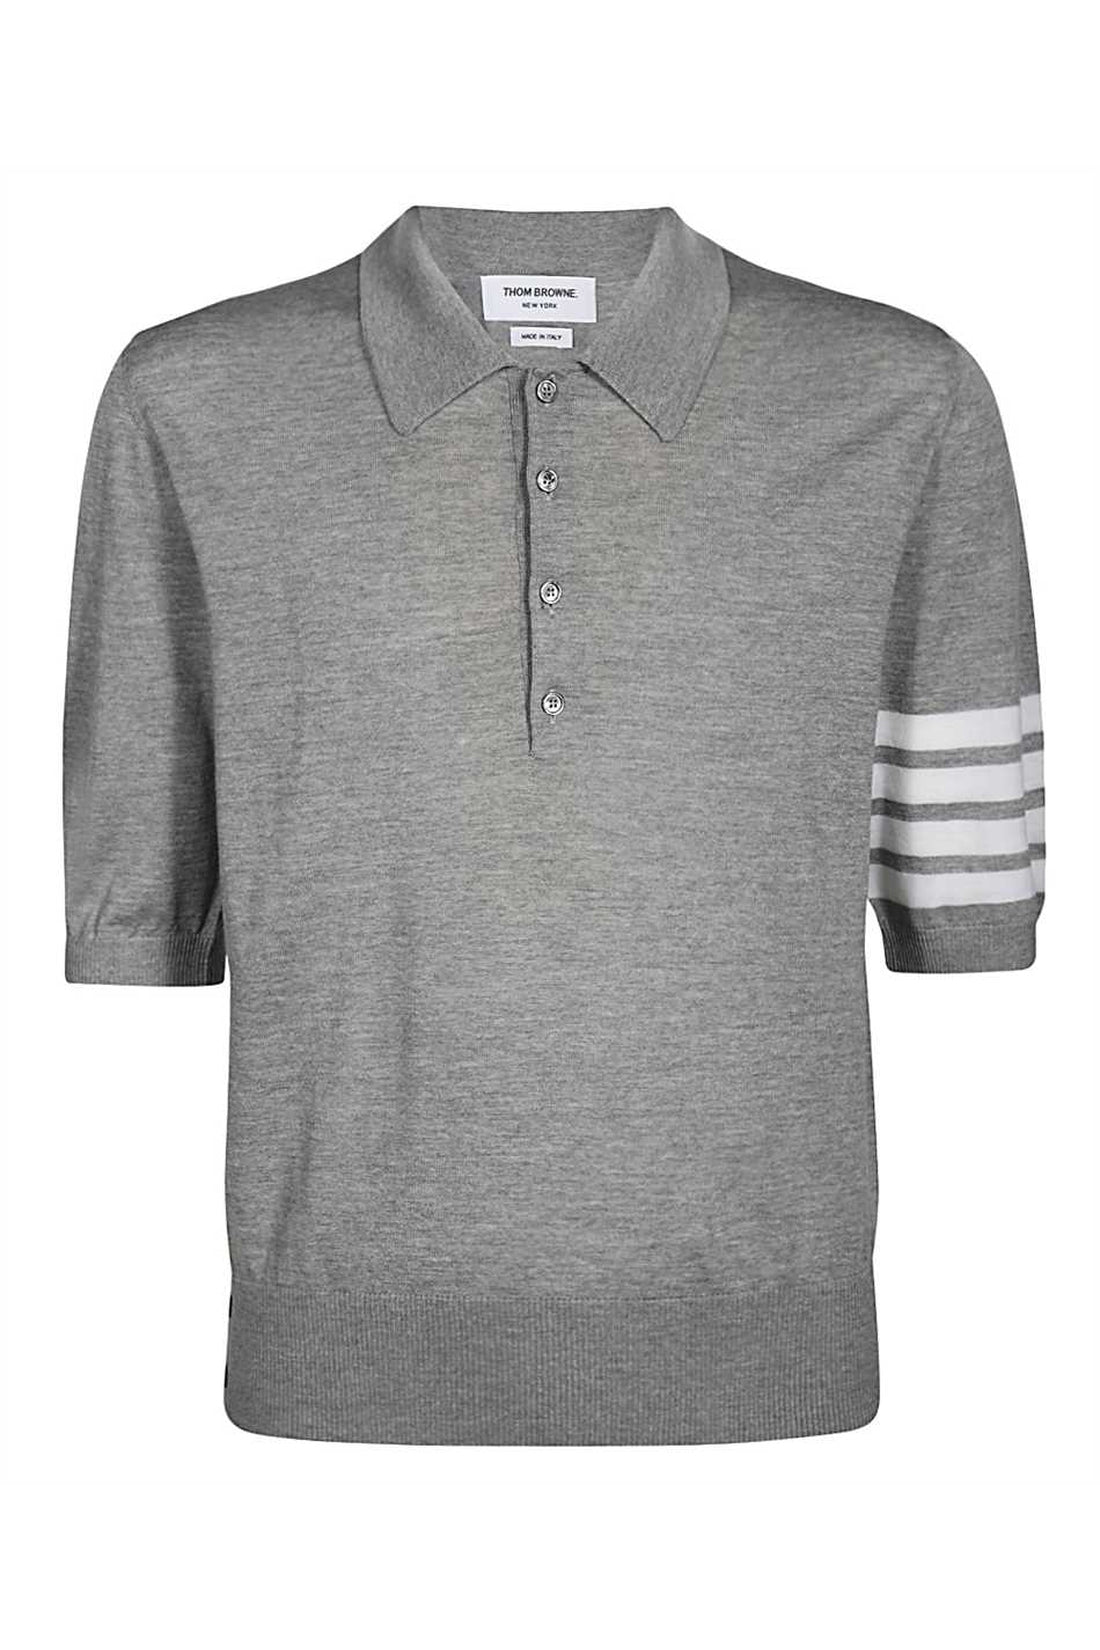 Thom Browne-OUTLET-SALE-Short sleeve cotton polo shirt-ARCHIVIST